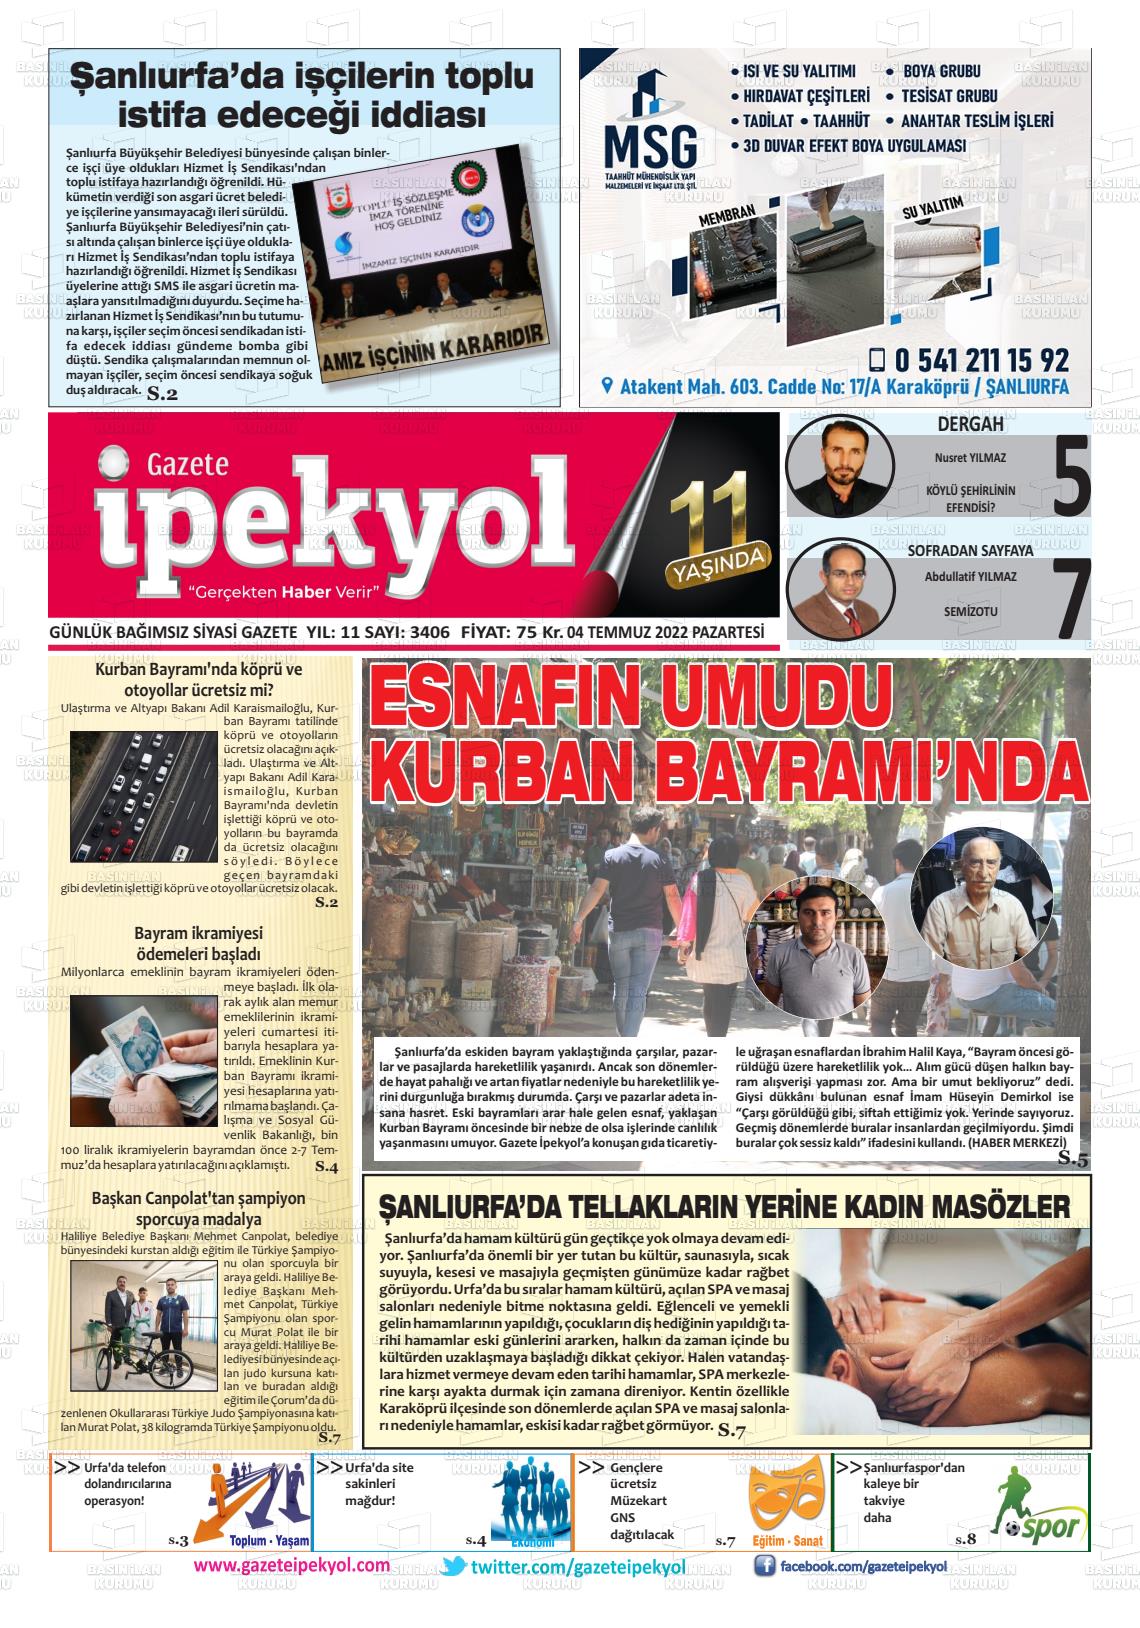 04 Temmuz 2022 Gazete İpekyol Gazete Manşeti